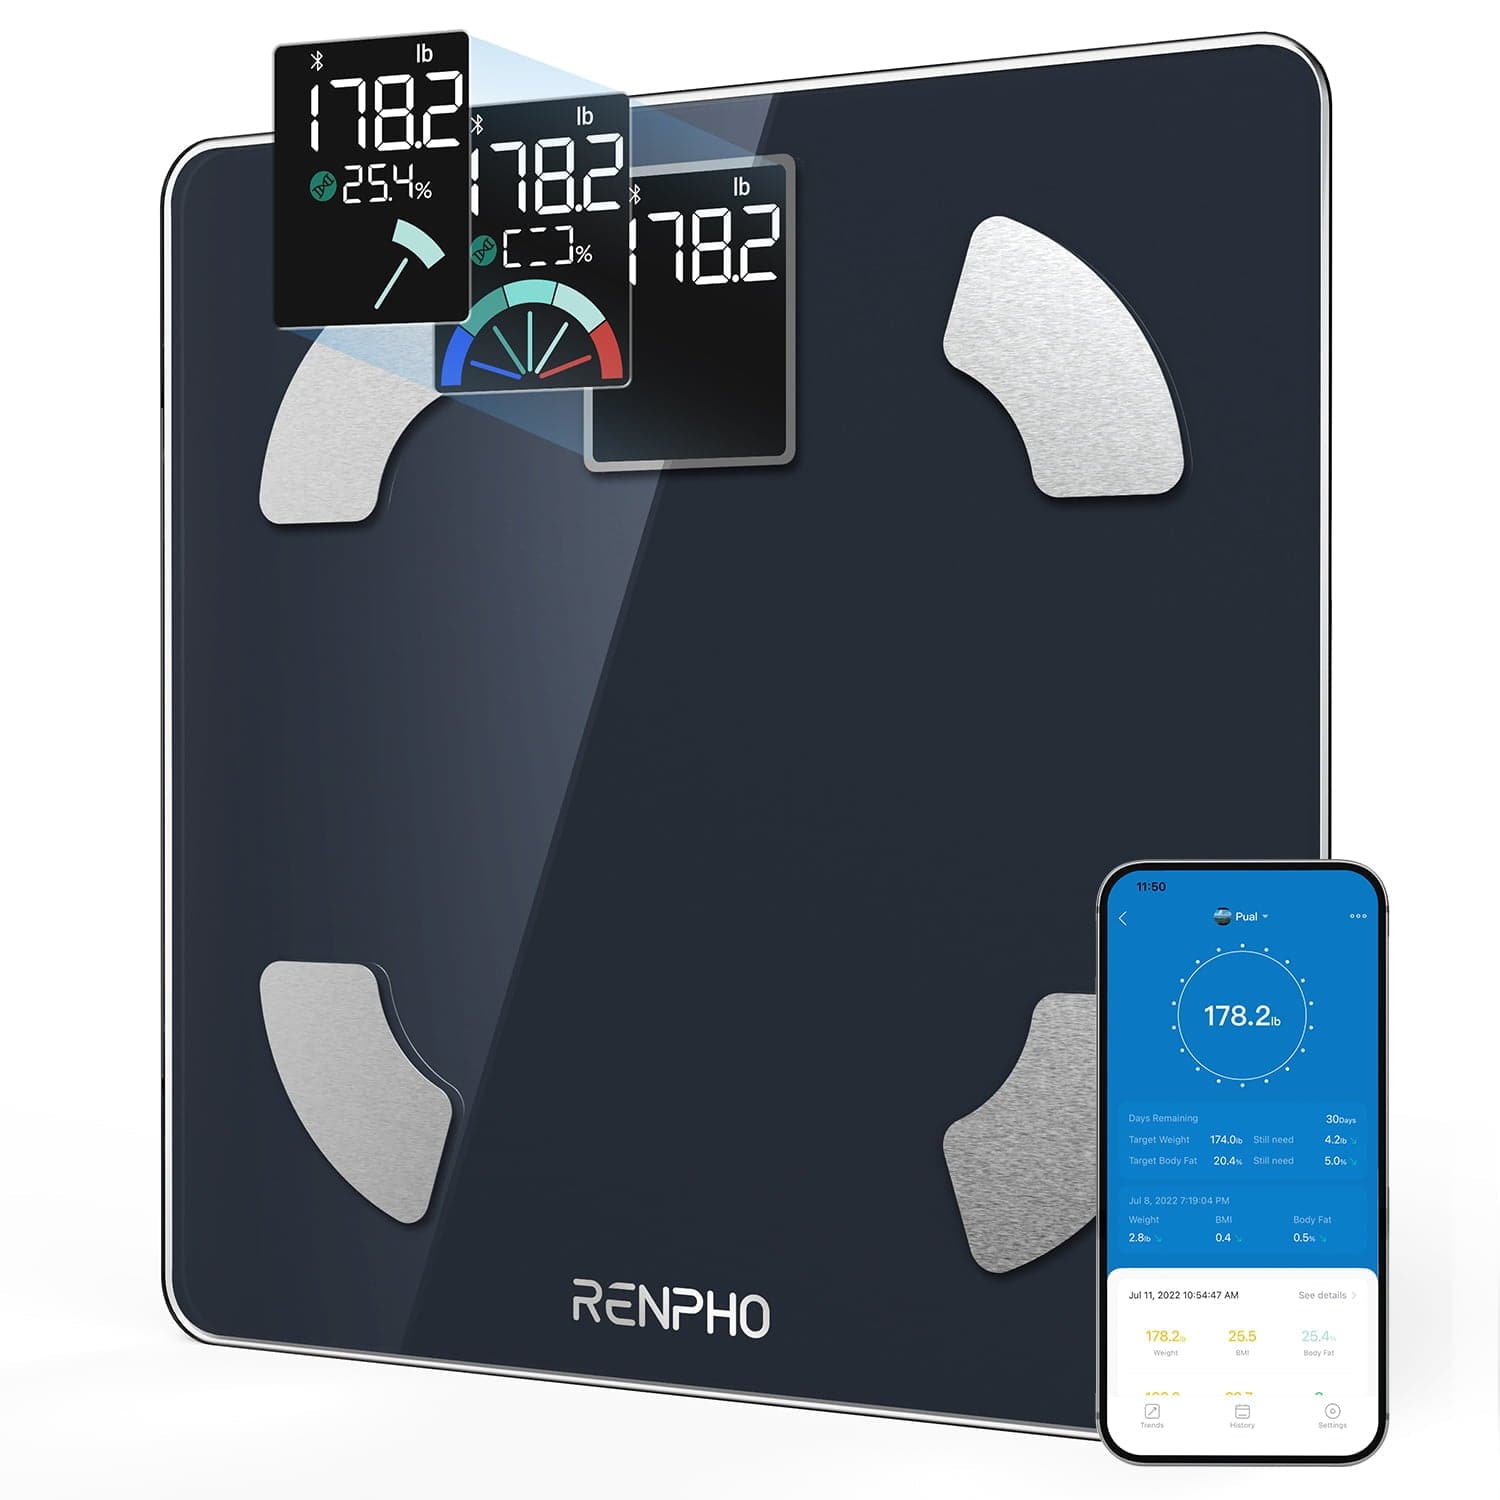 RENPHO Bluetooth Smart Scale A006